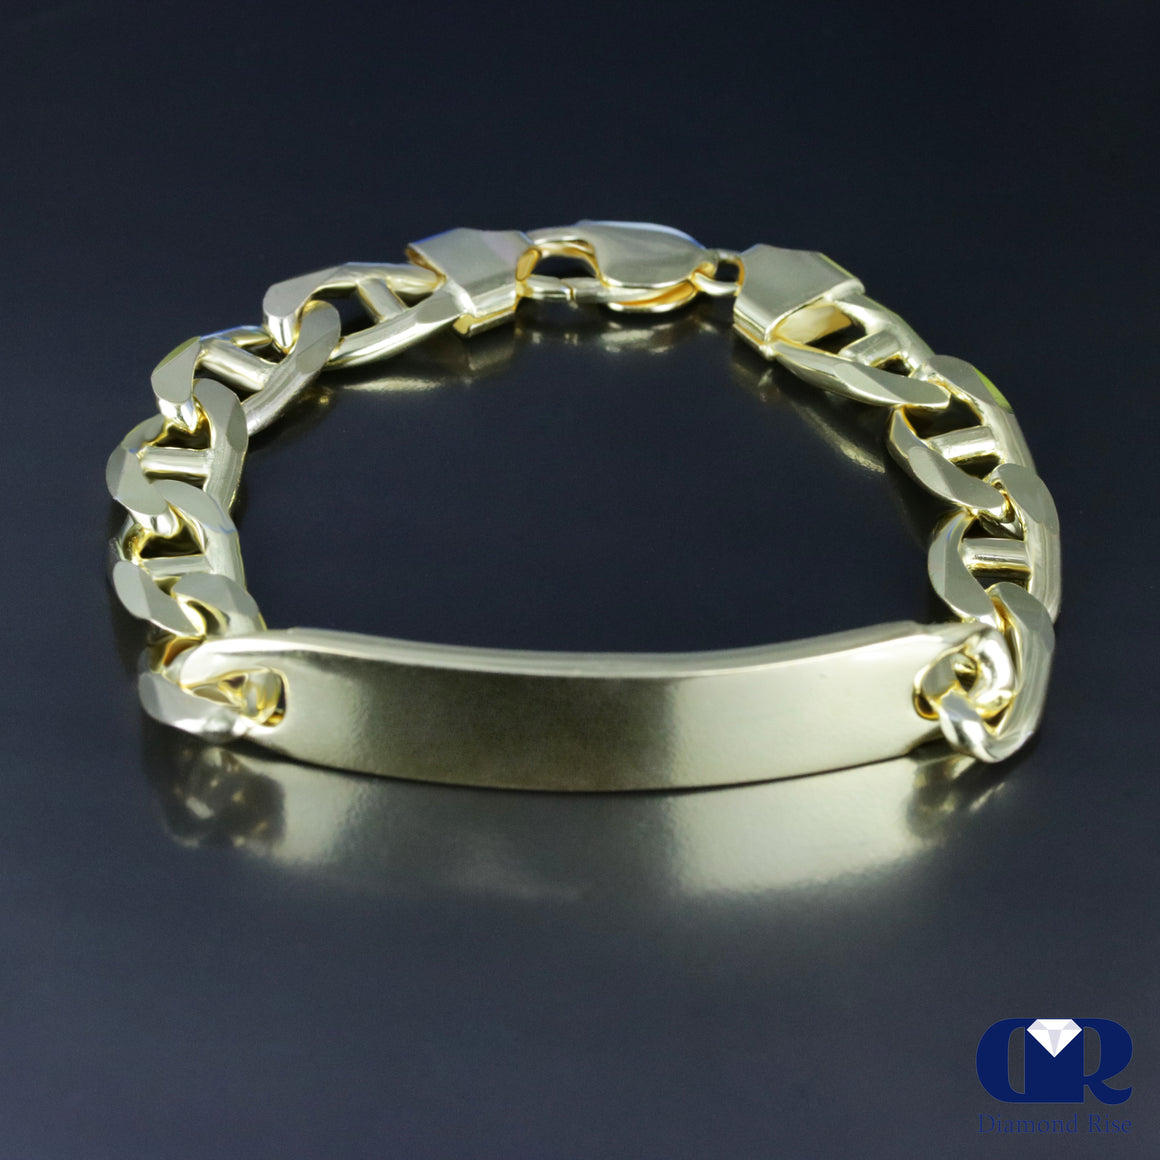 Men's Solid 14K Yellow Gold 11 mm ID Mariner Link Bracelet 8.5" - Diamond Rise Jewelry